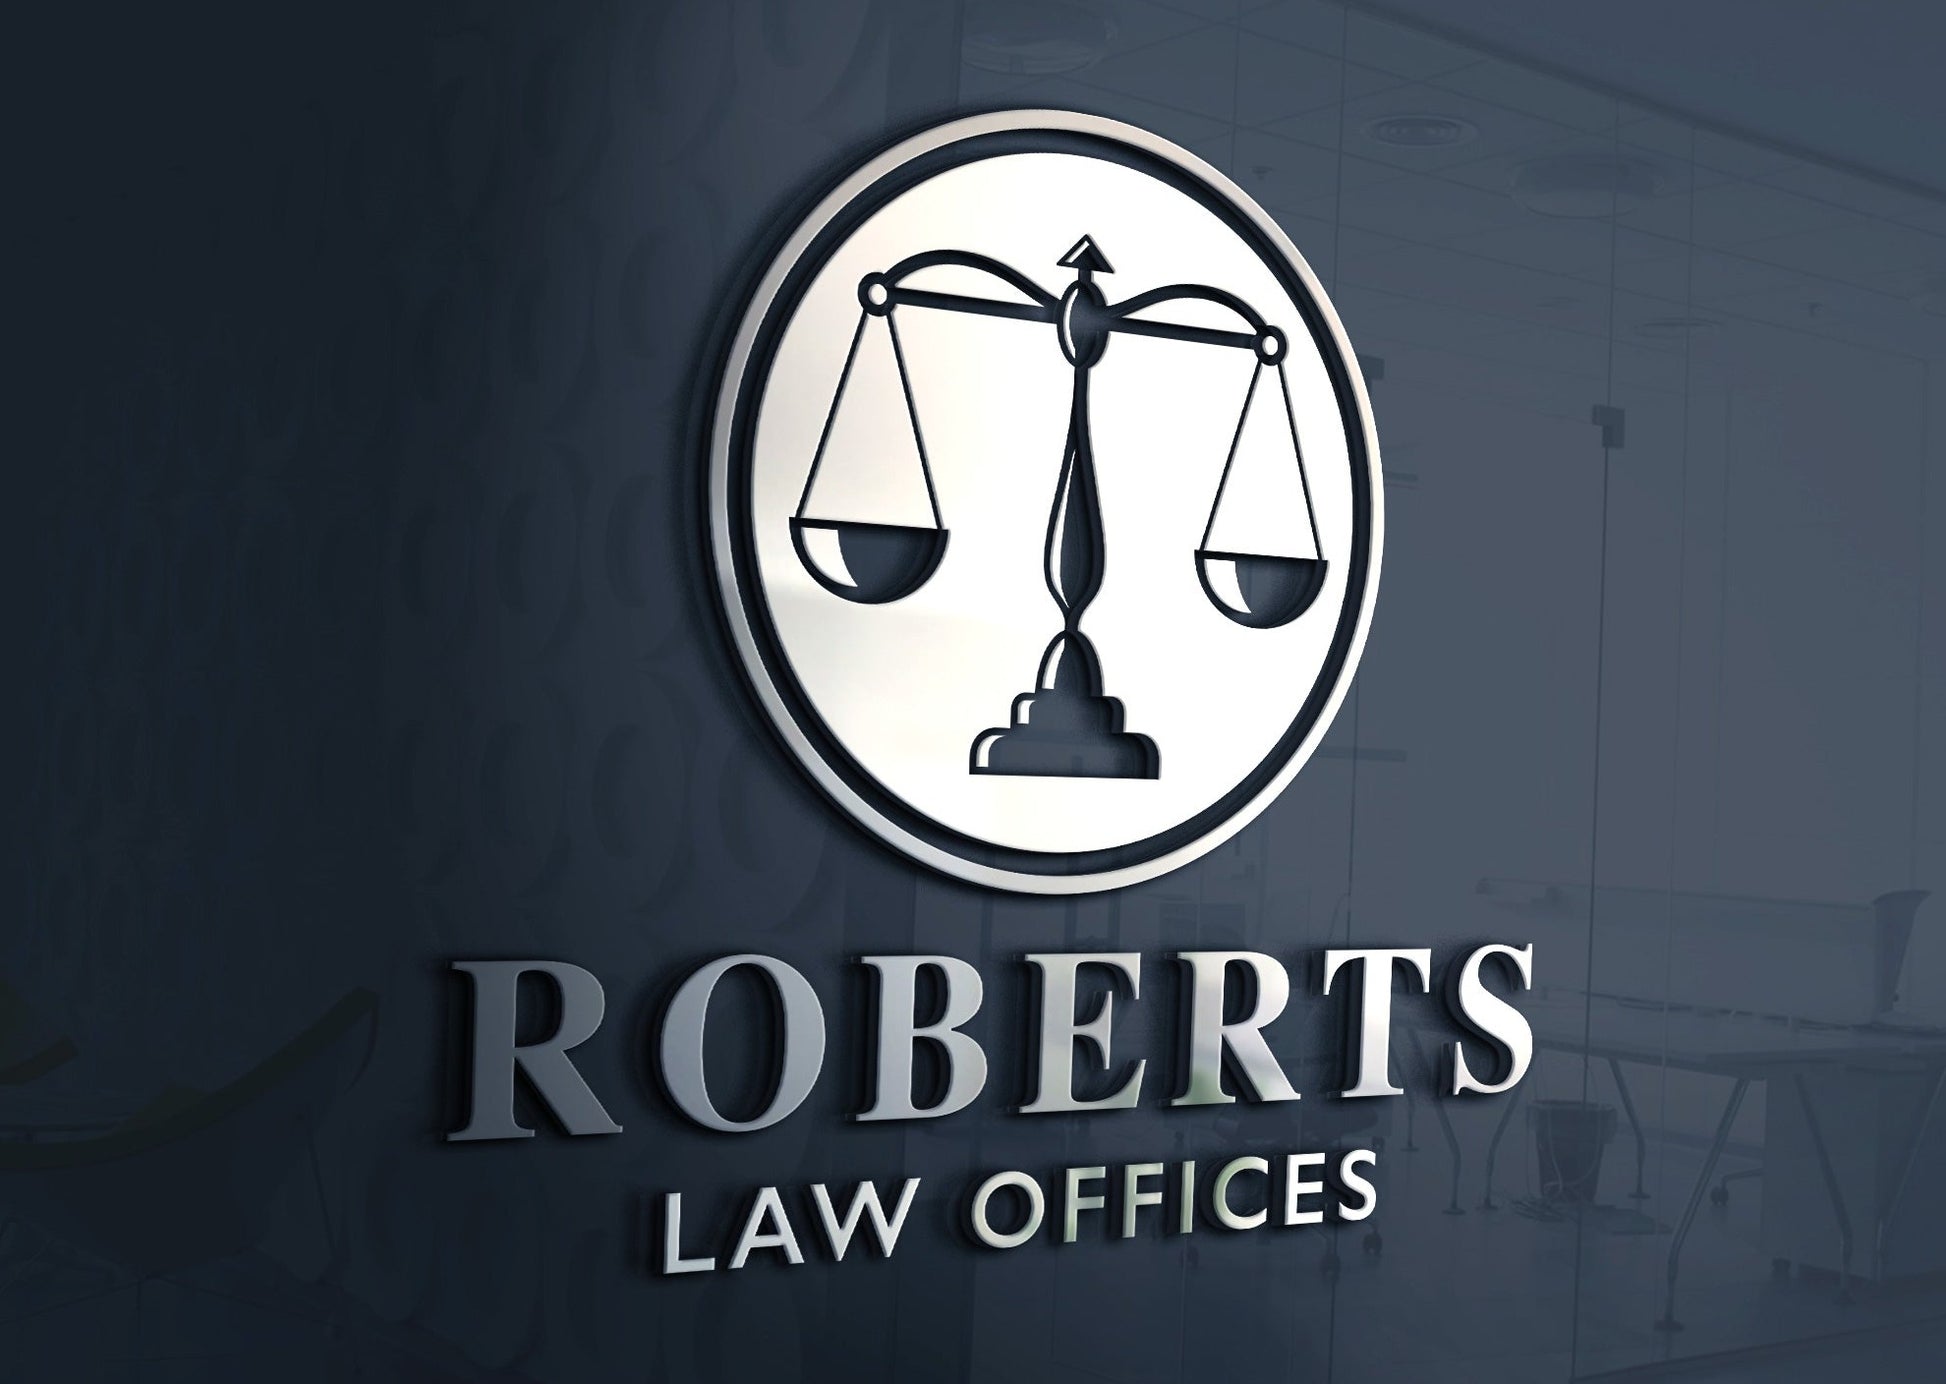 creative law firm logos